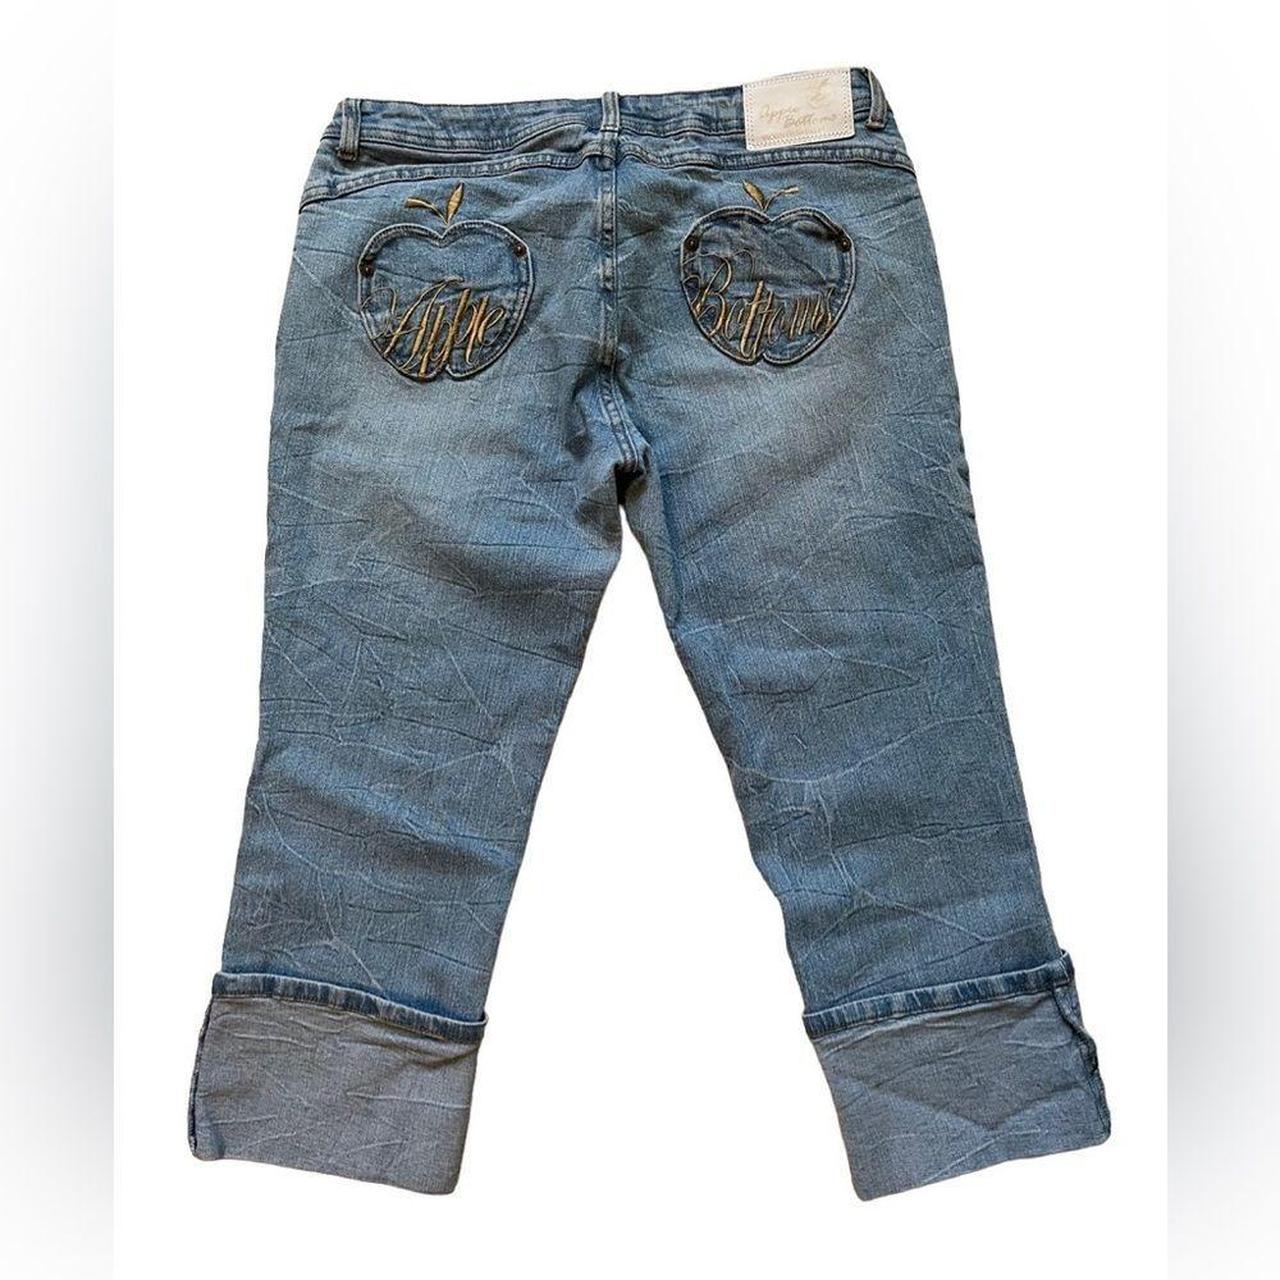 Apple Bottom Jeans Vintage Trousers Blue Denim Embroidered